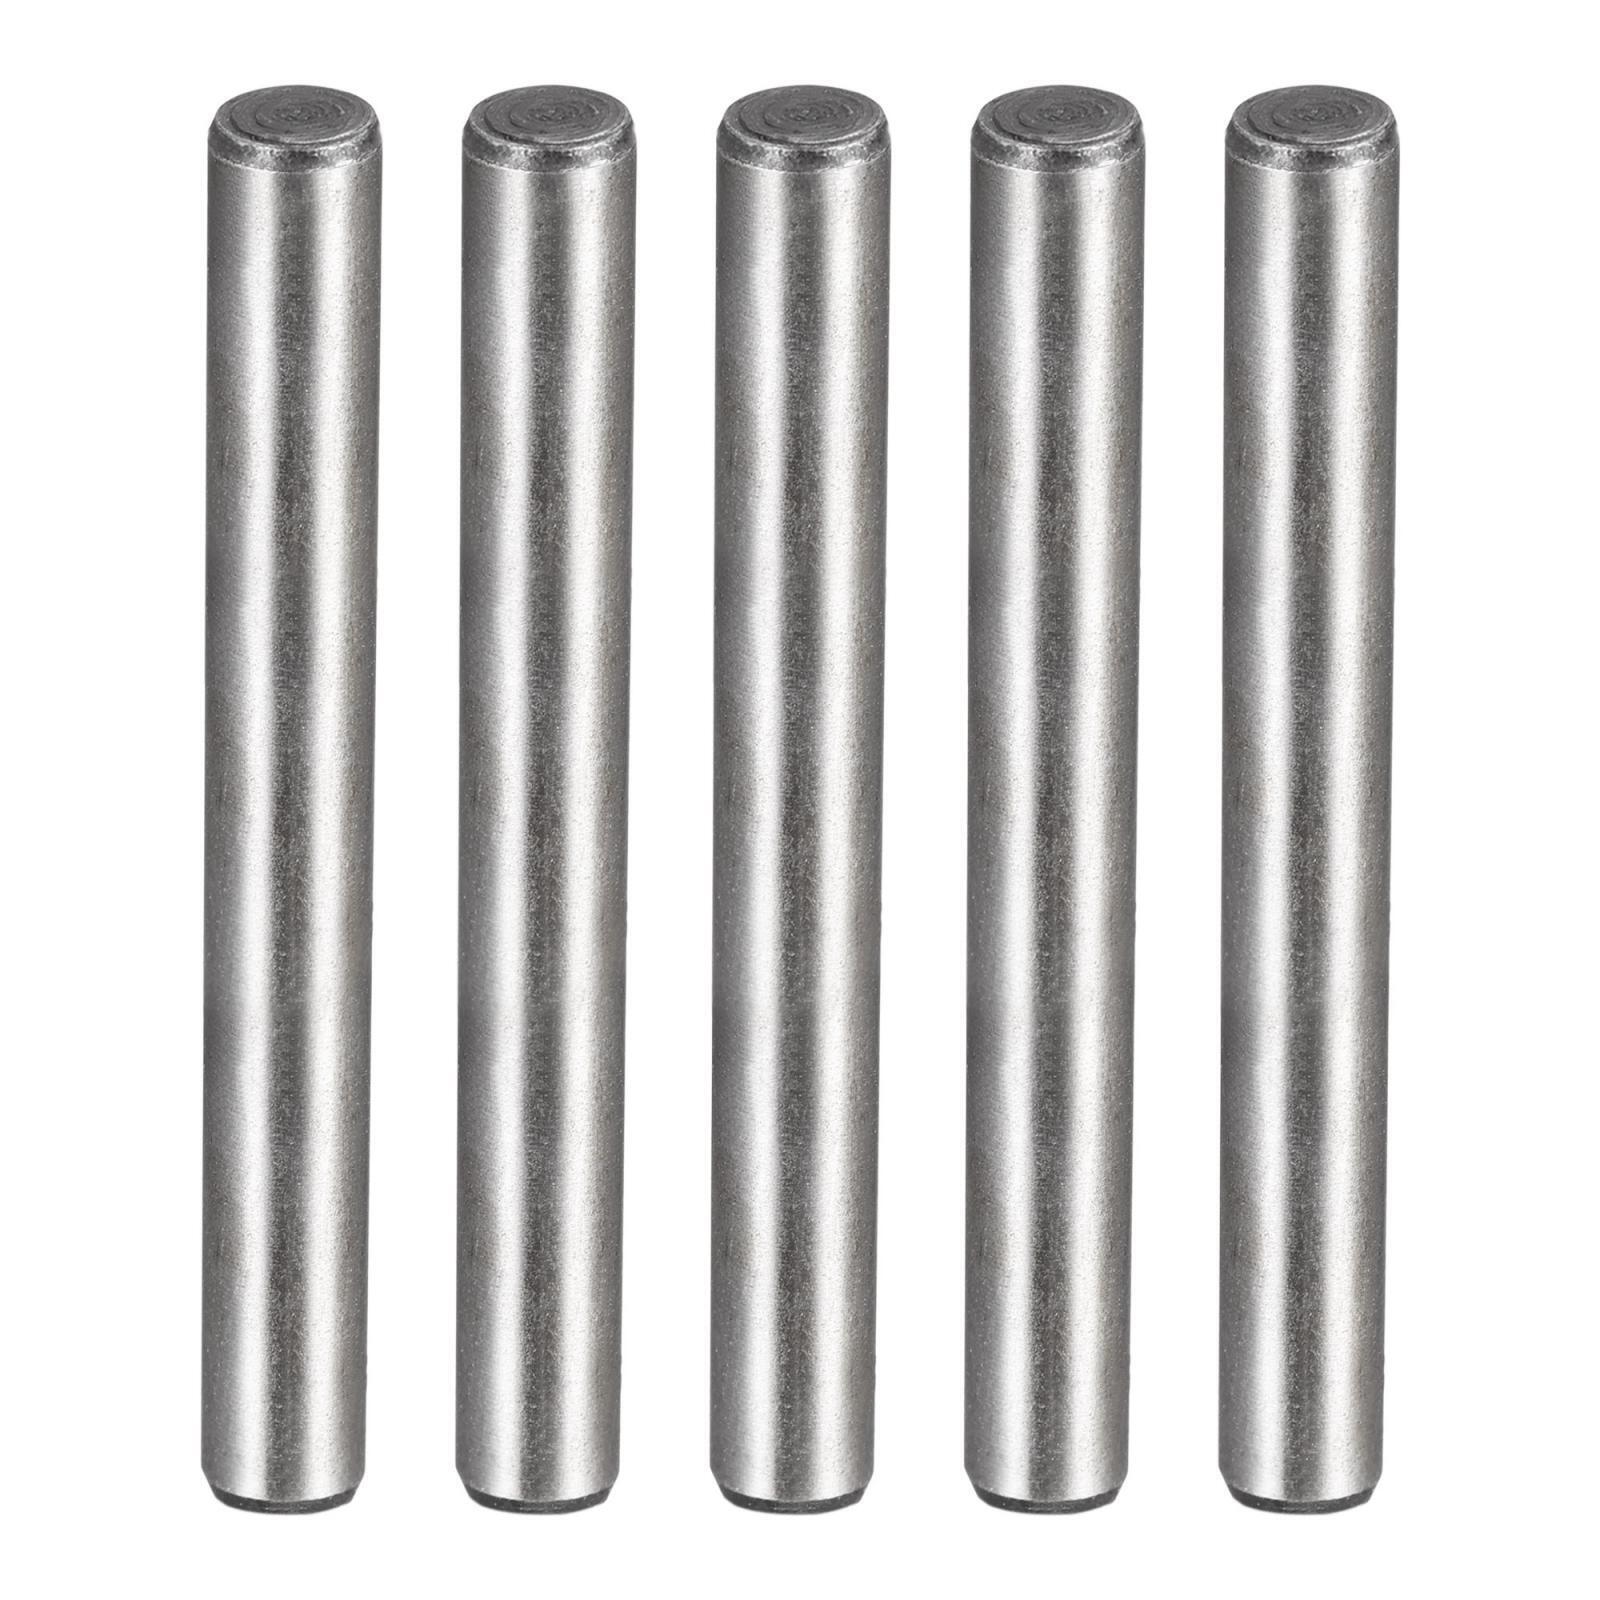 3/16-inch X 1-3/4-inch Dowel Pins, Heat Treated Alloy Steel Bright Finish 5pcs